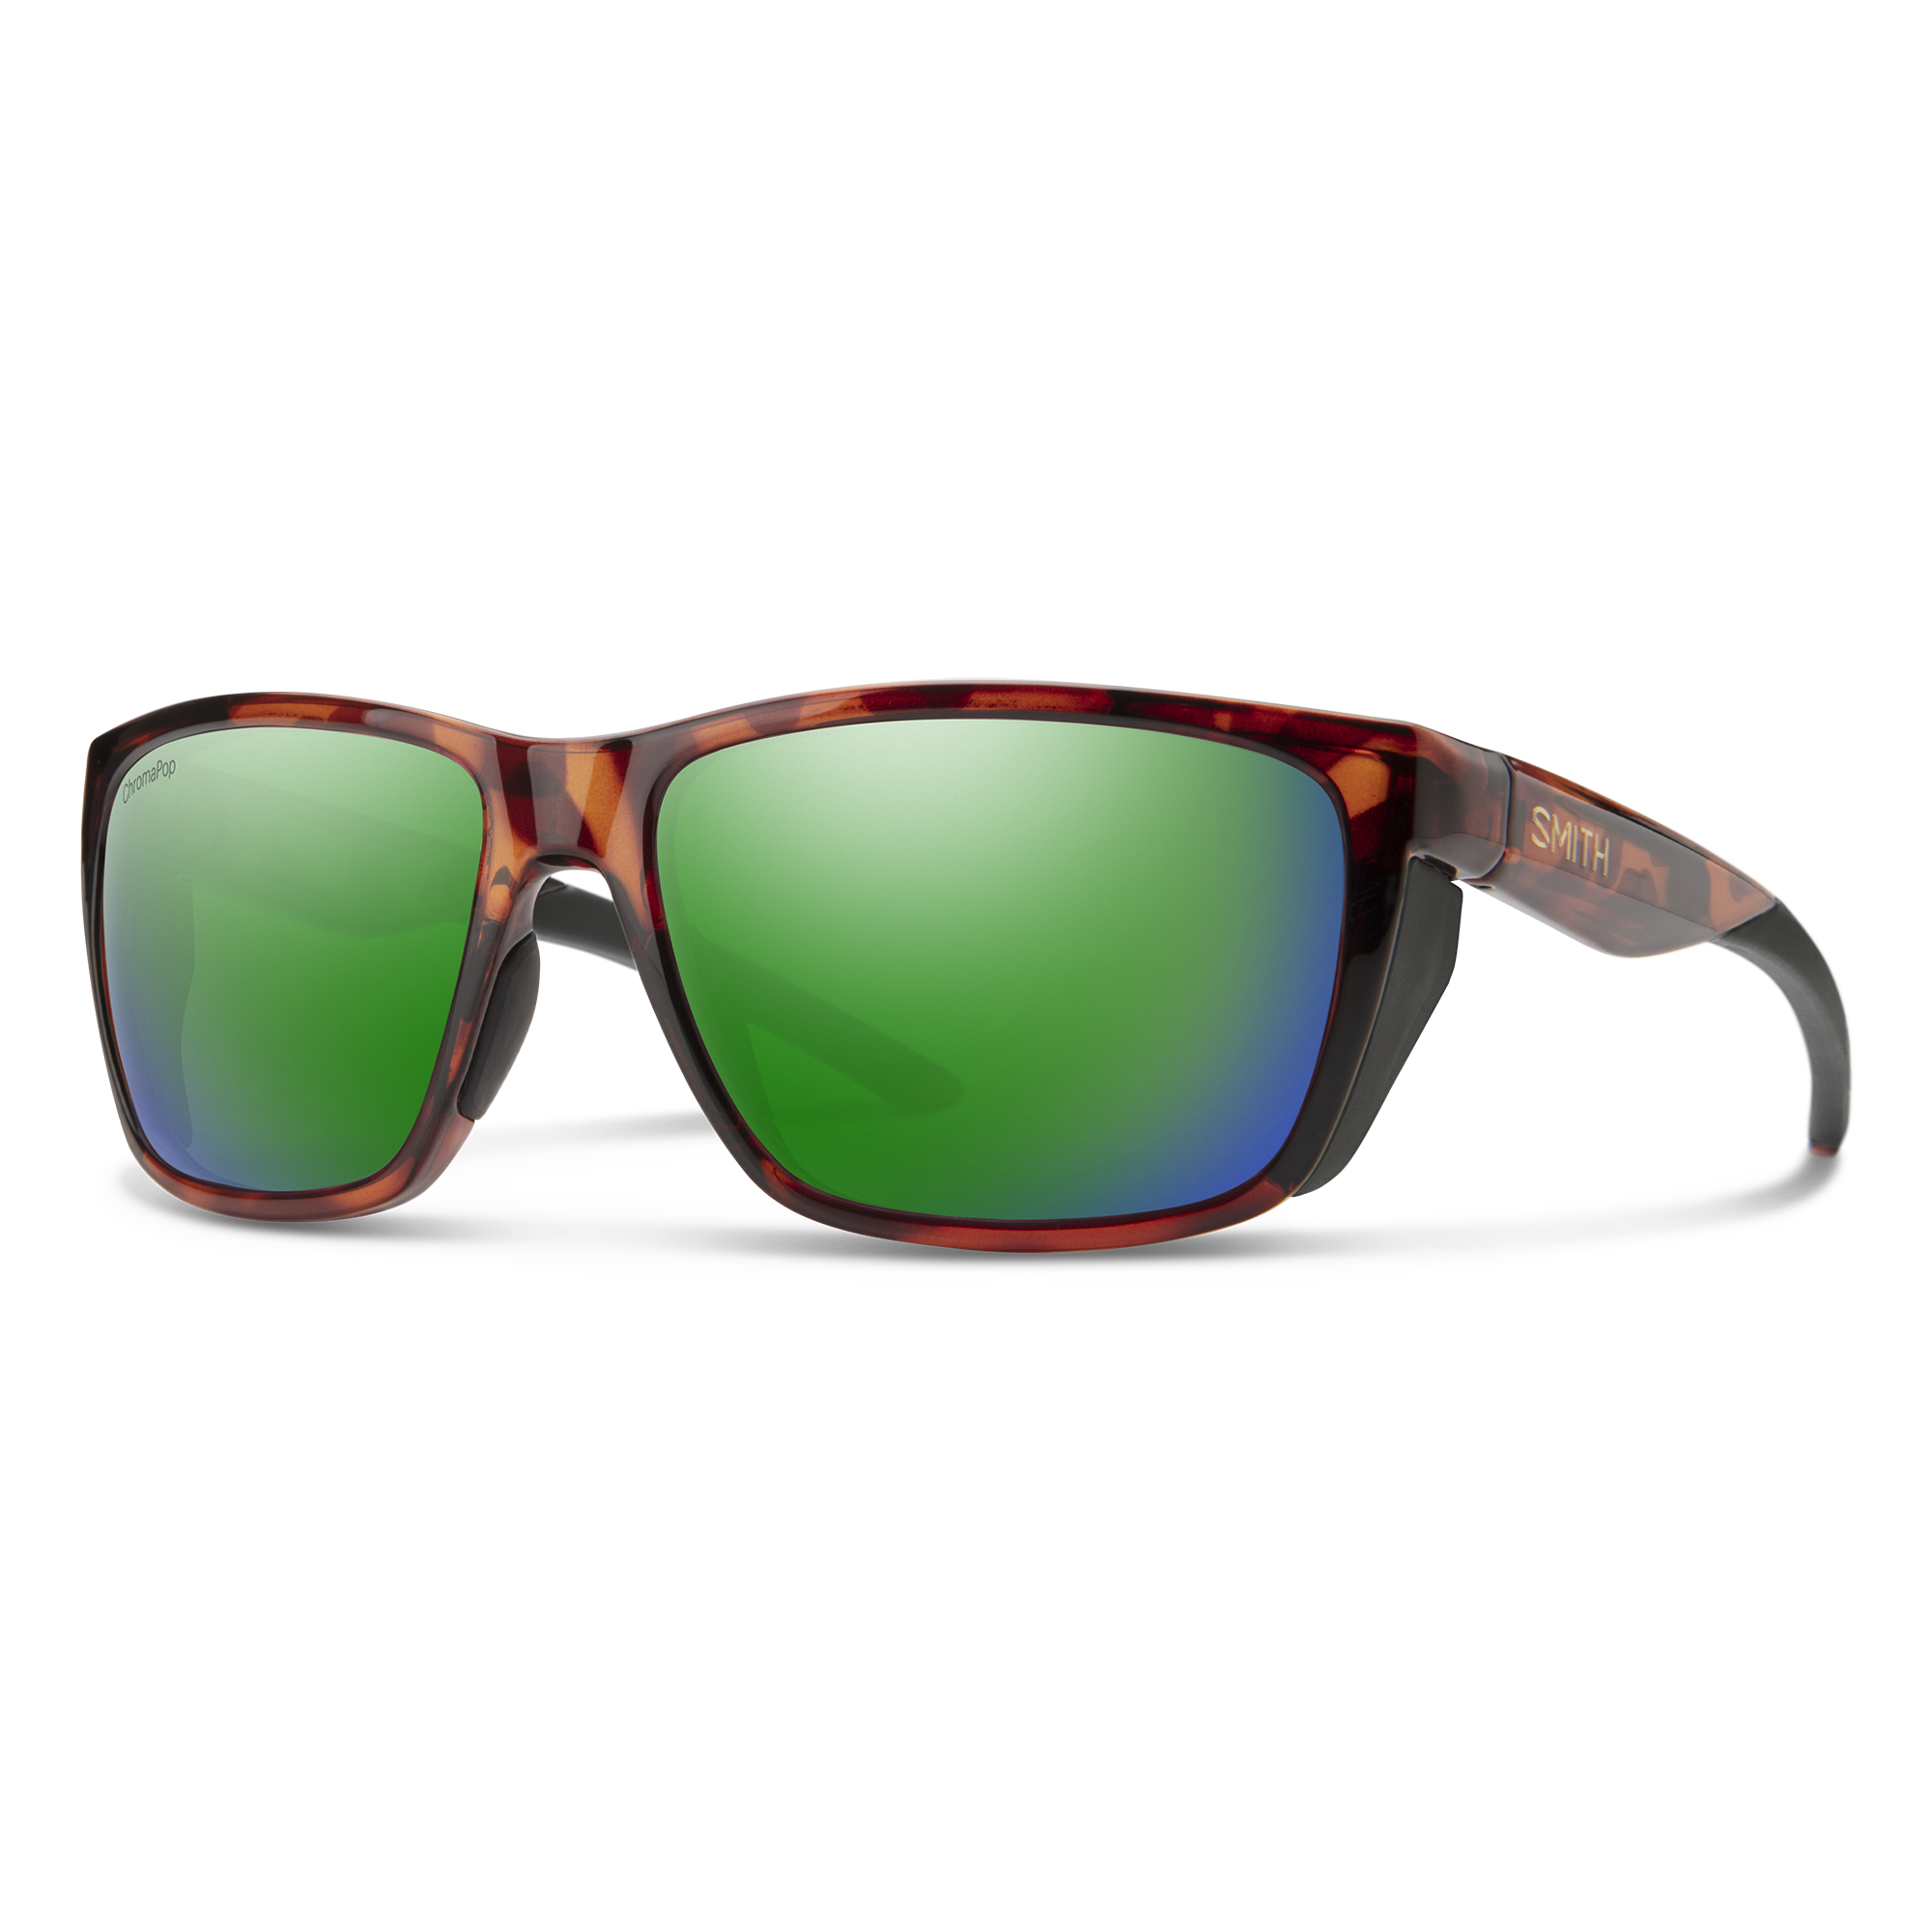 Smith Optics Sunglasses - Longfin - Addict Tackle